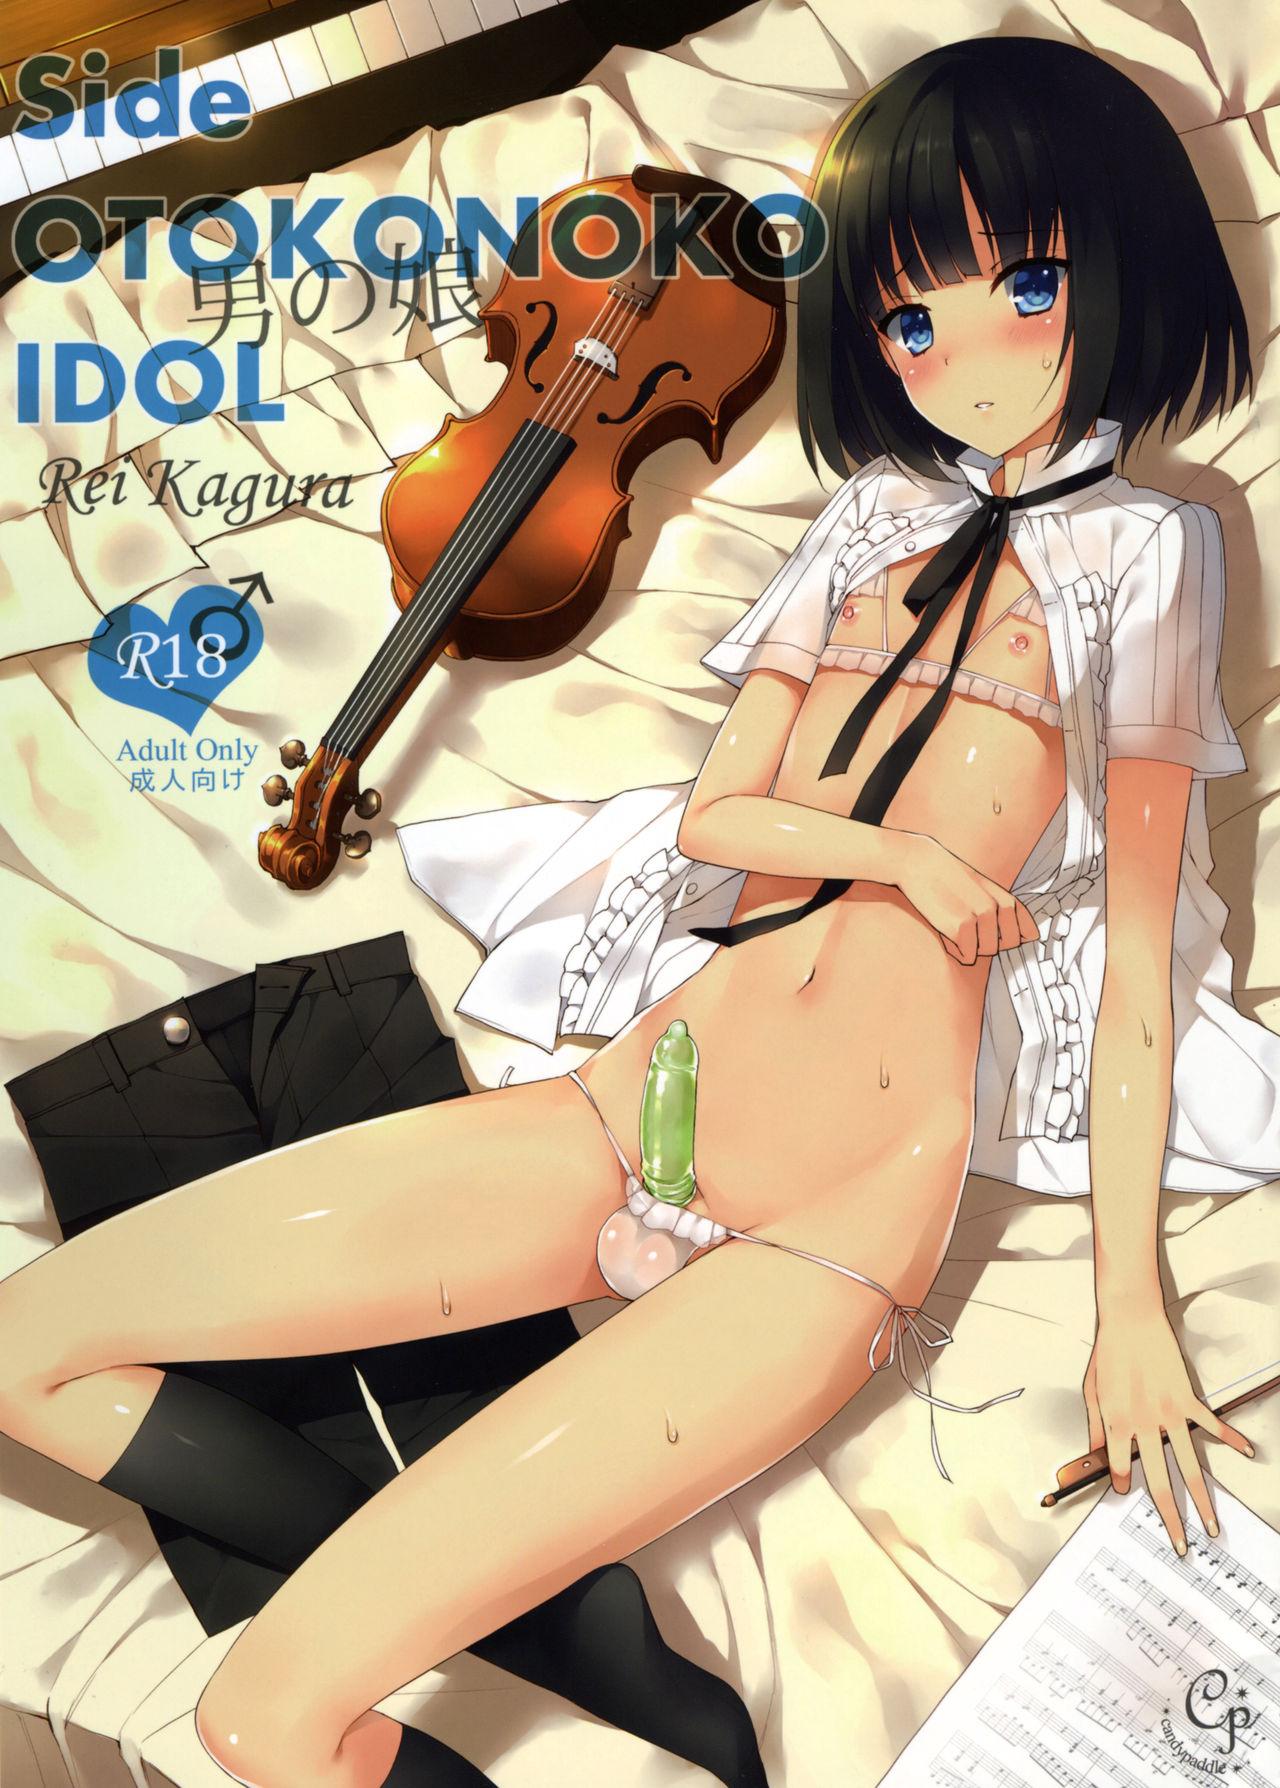 HD Side OTOKONOKO IDOL Rei Kagura - The idolmaster Softcore - Picture 1